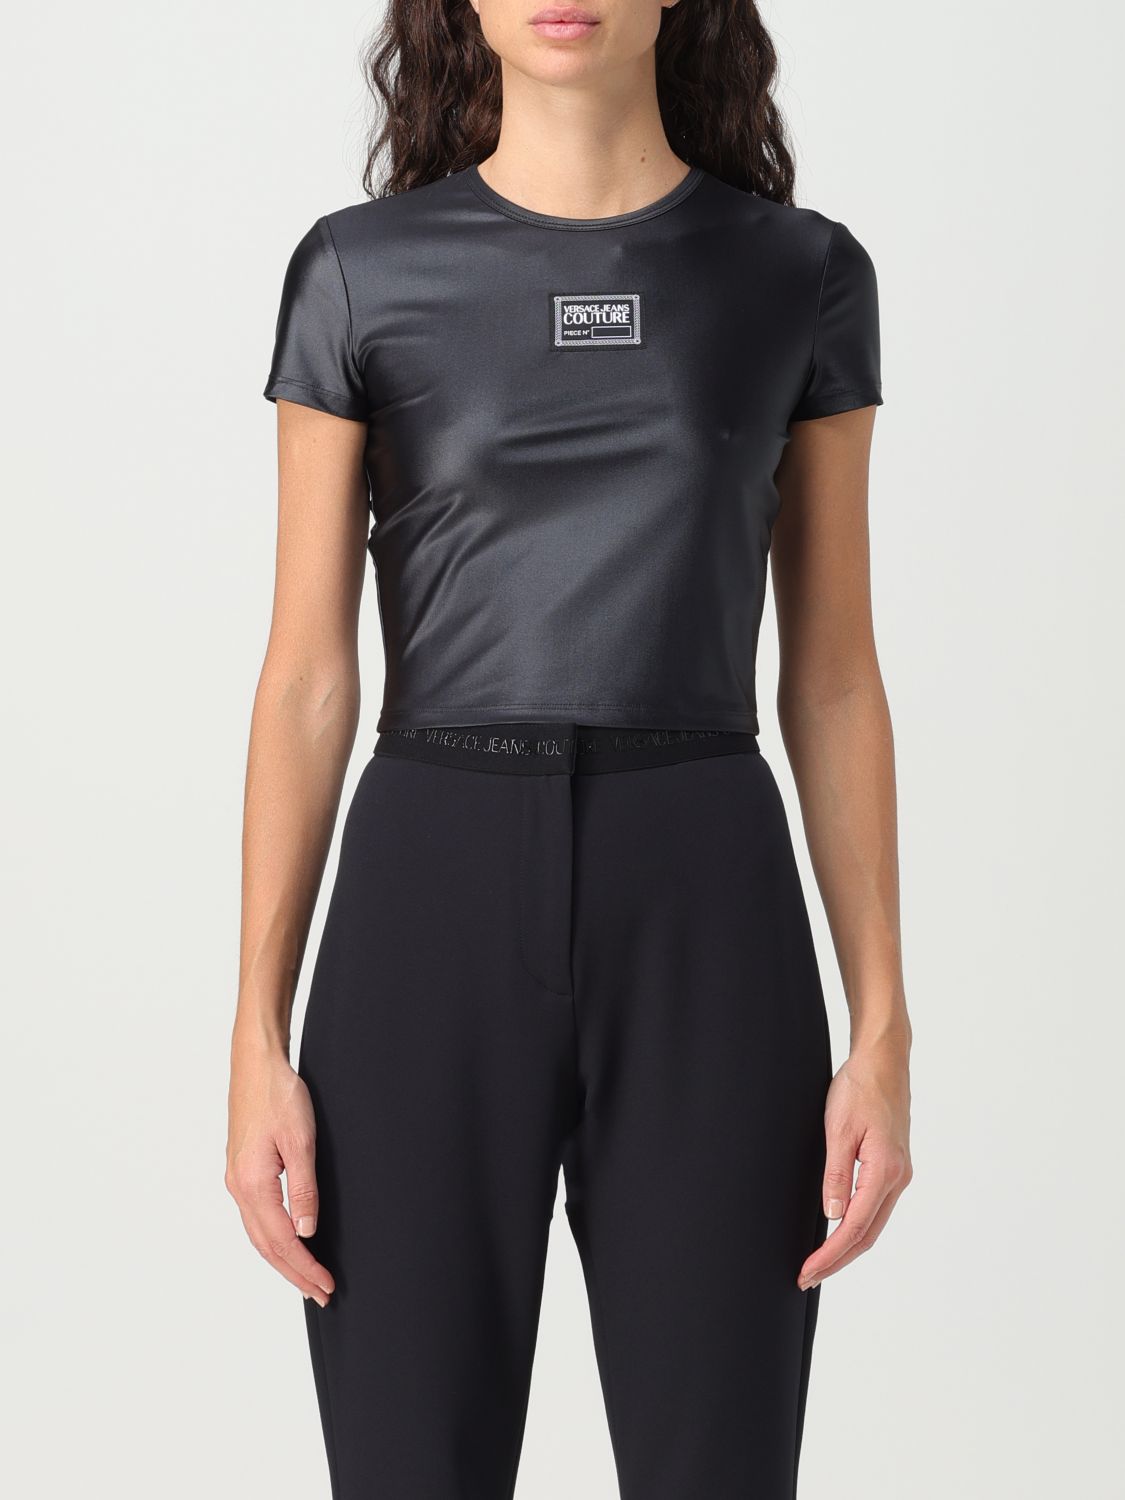 Versace Jeans Couture T-shirt  Damen Farbe Schwarz In Black